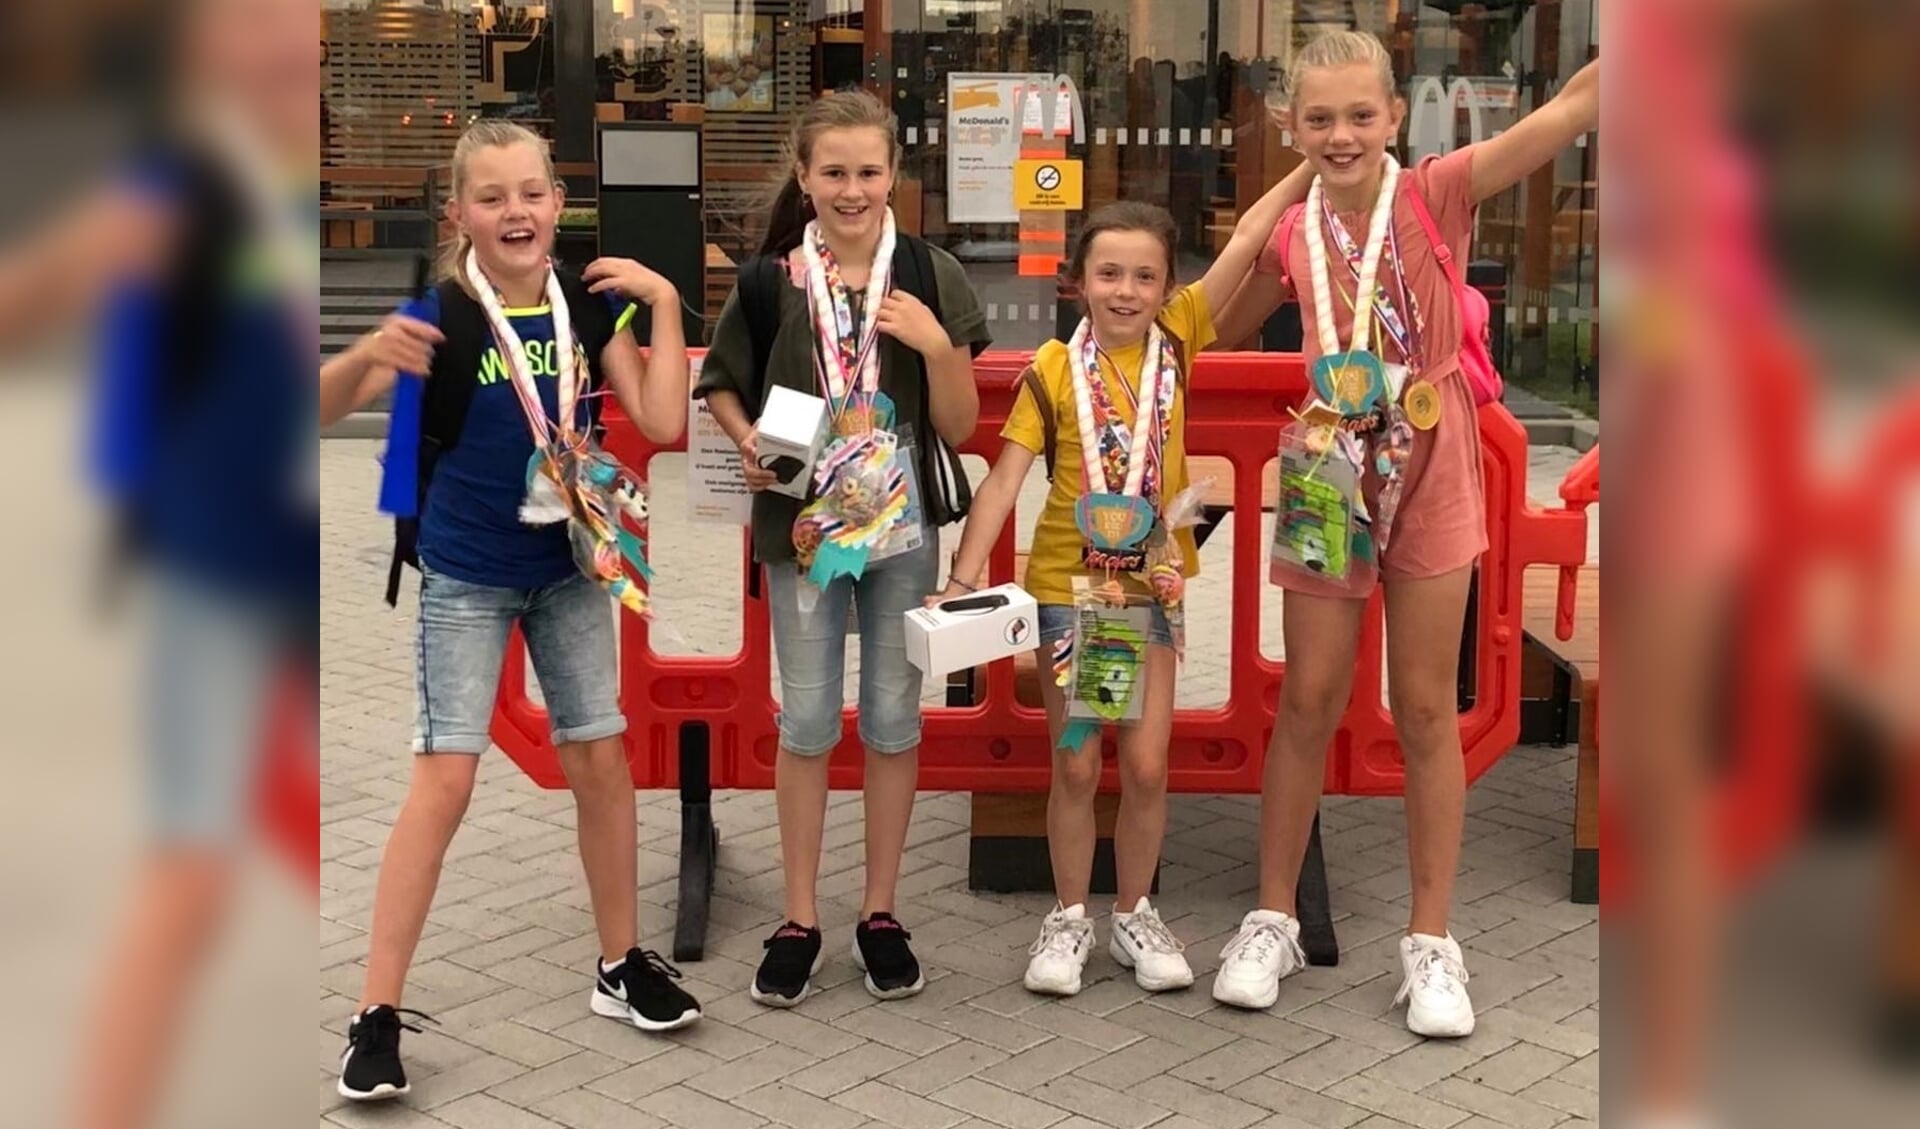 Tirsa, Sarah, Britt en Fenna staan trots op de foto met hun medailles.